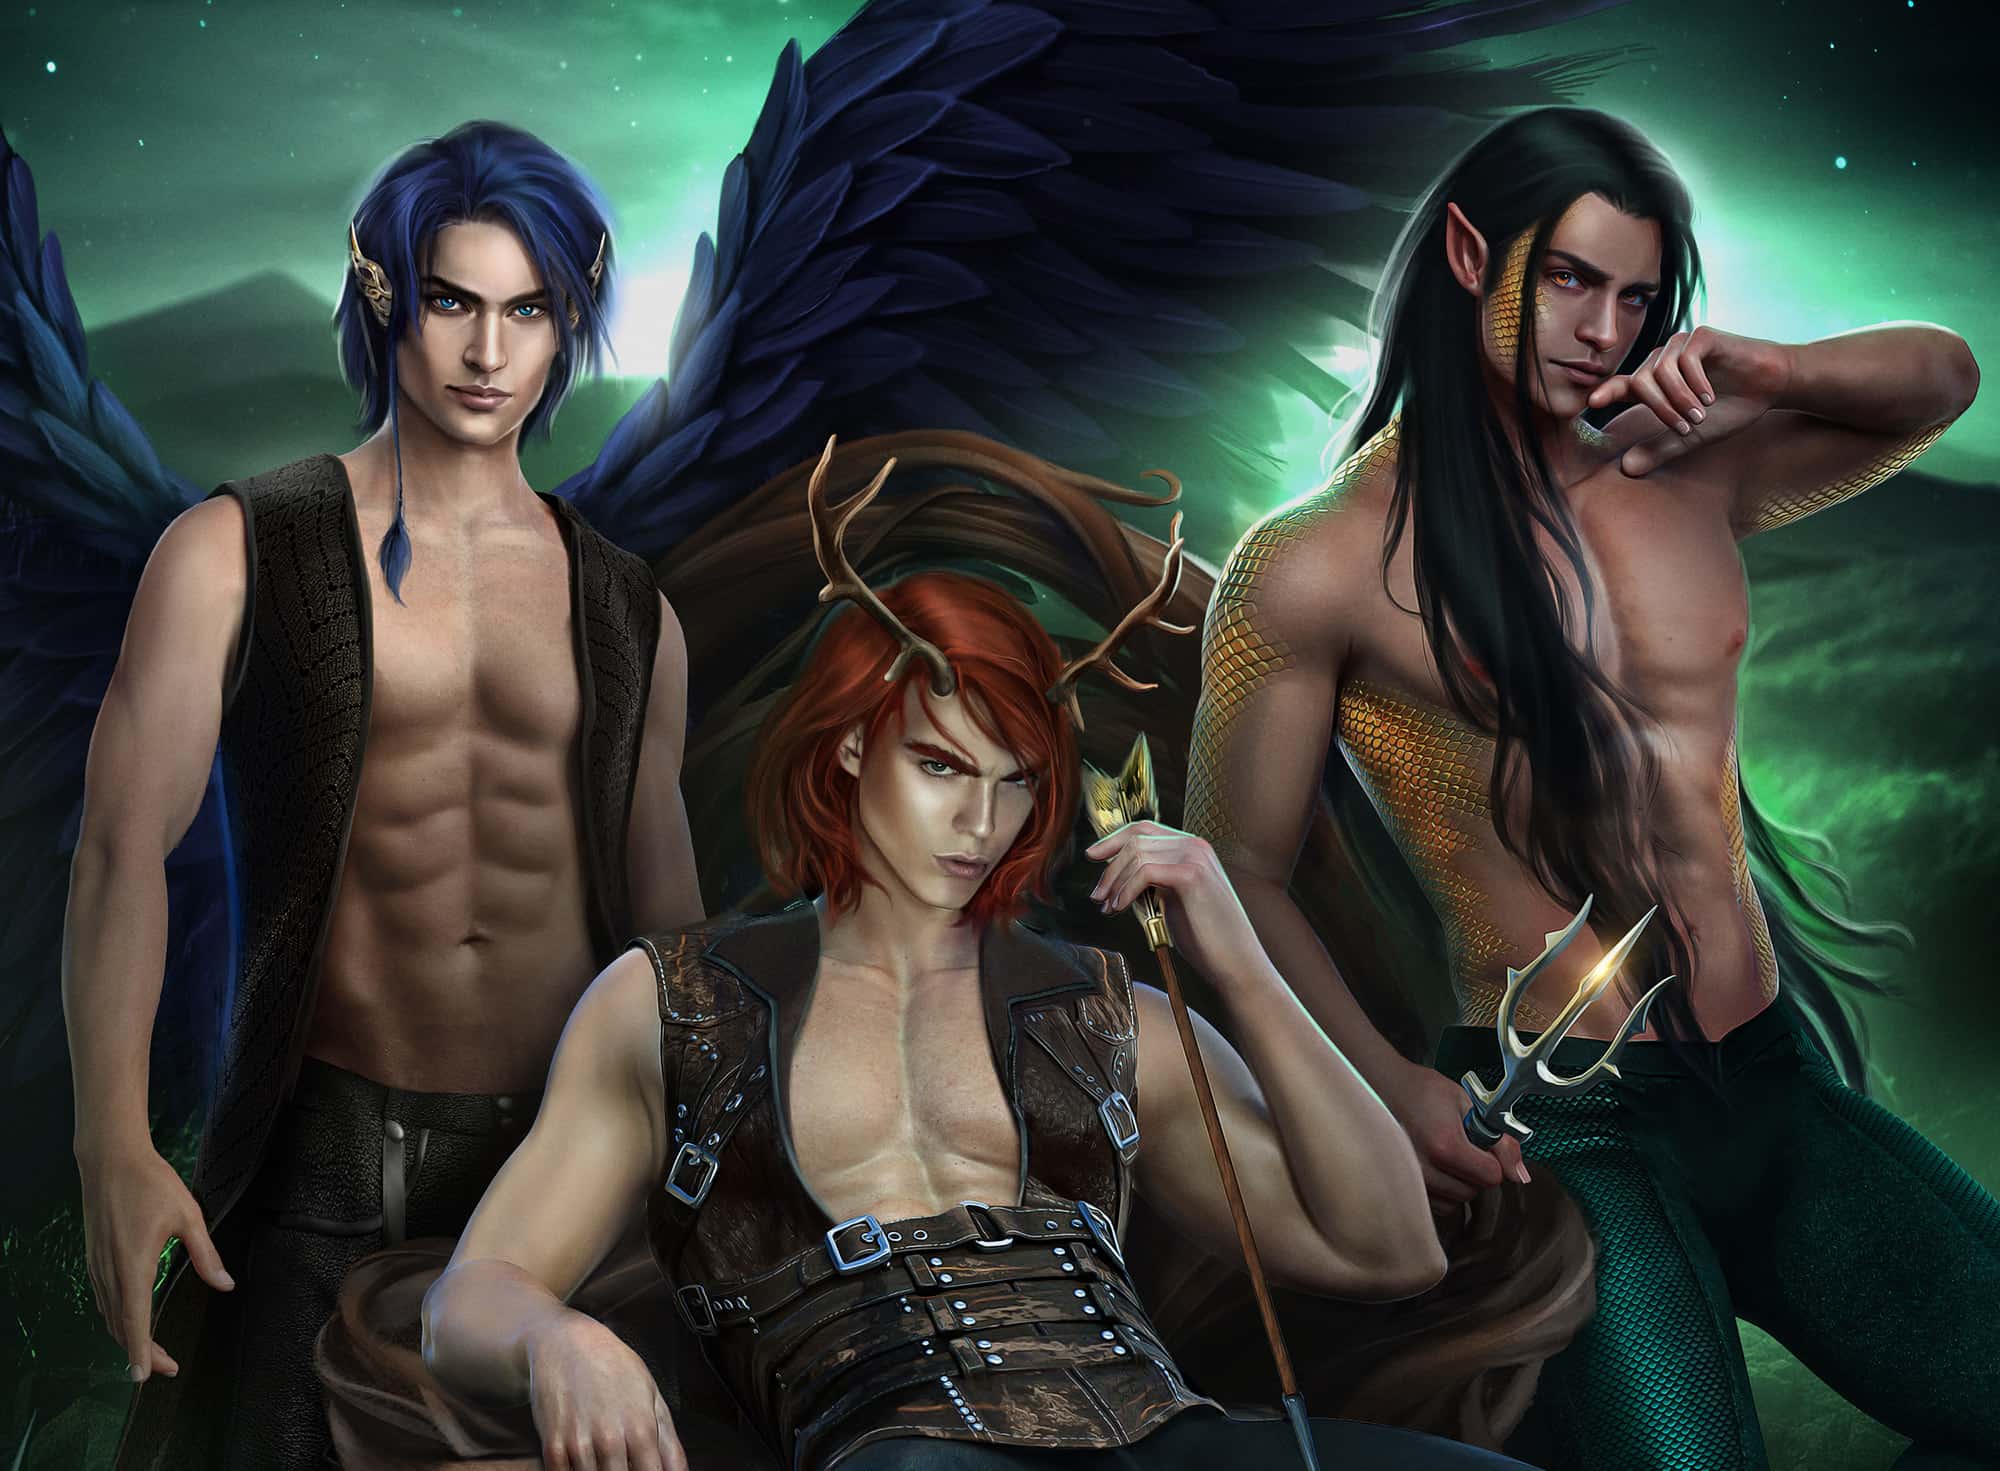 Three magical male characters